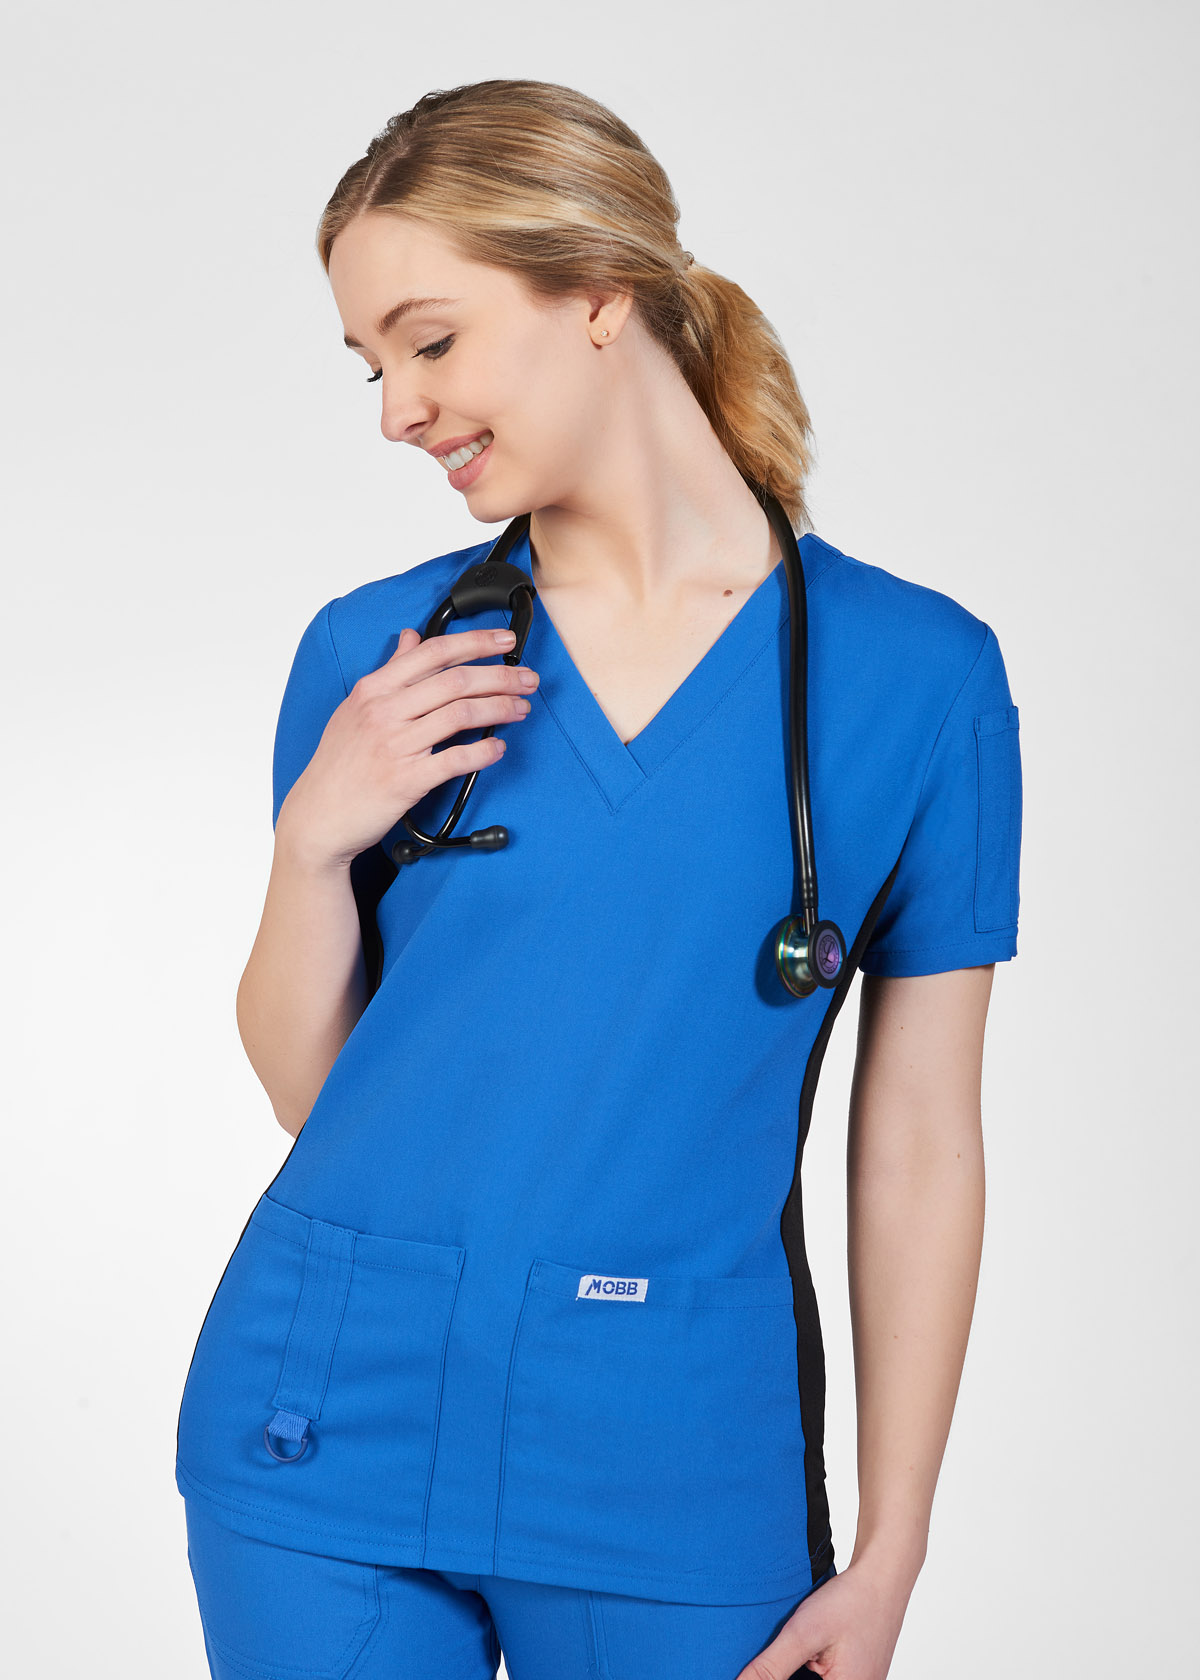 MOBB Medical Uniforms - Nurse Wear Scrubs - Chef Wear - Universal